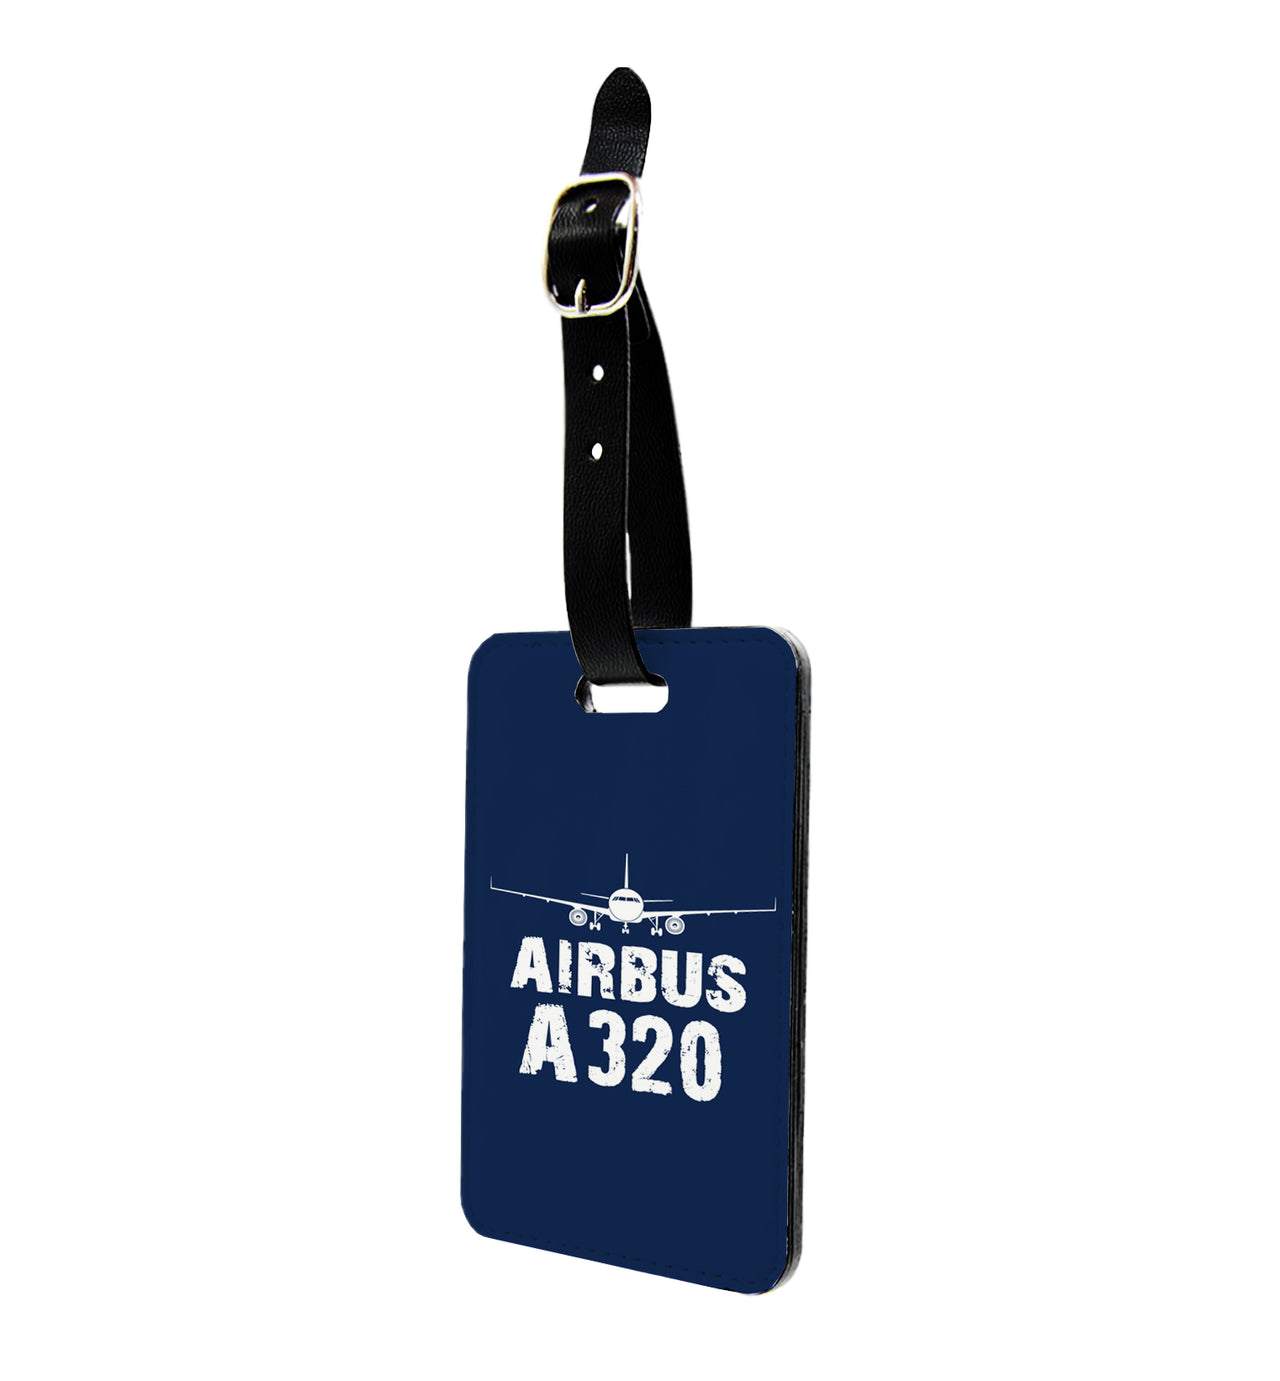 Airbus A320 & Plane Designed Luggage Tag